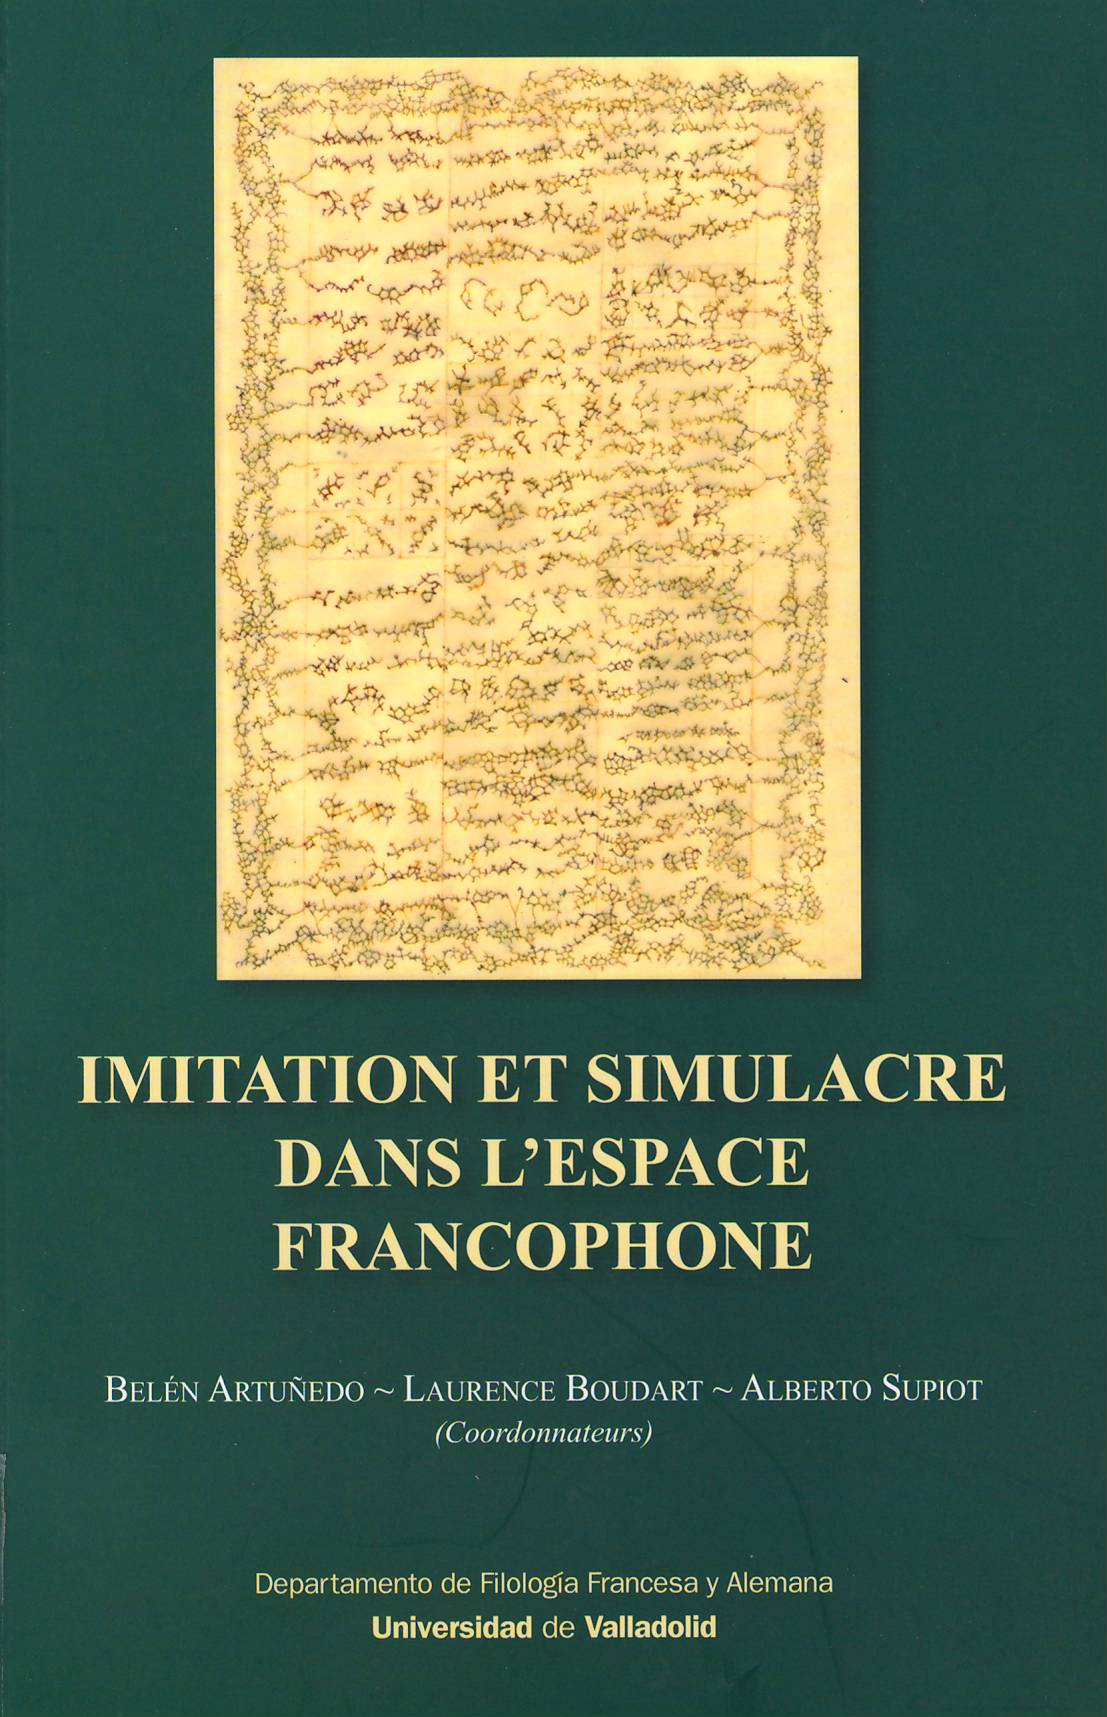 Imagen de portada del libro Imitation et simulacre dans l'espace francophone